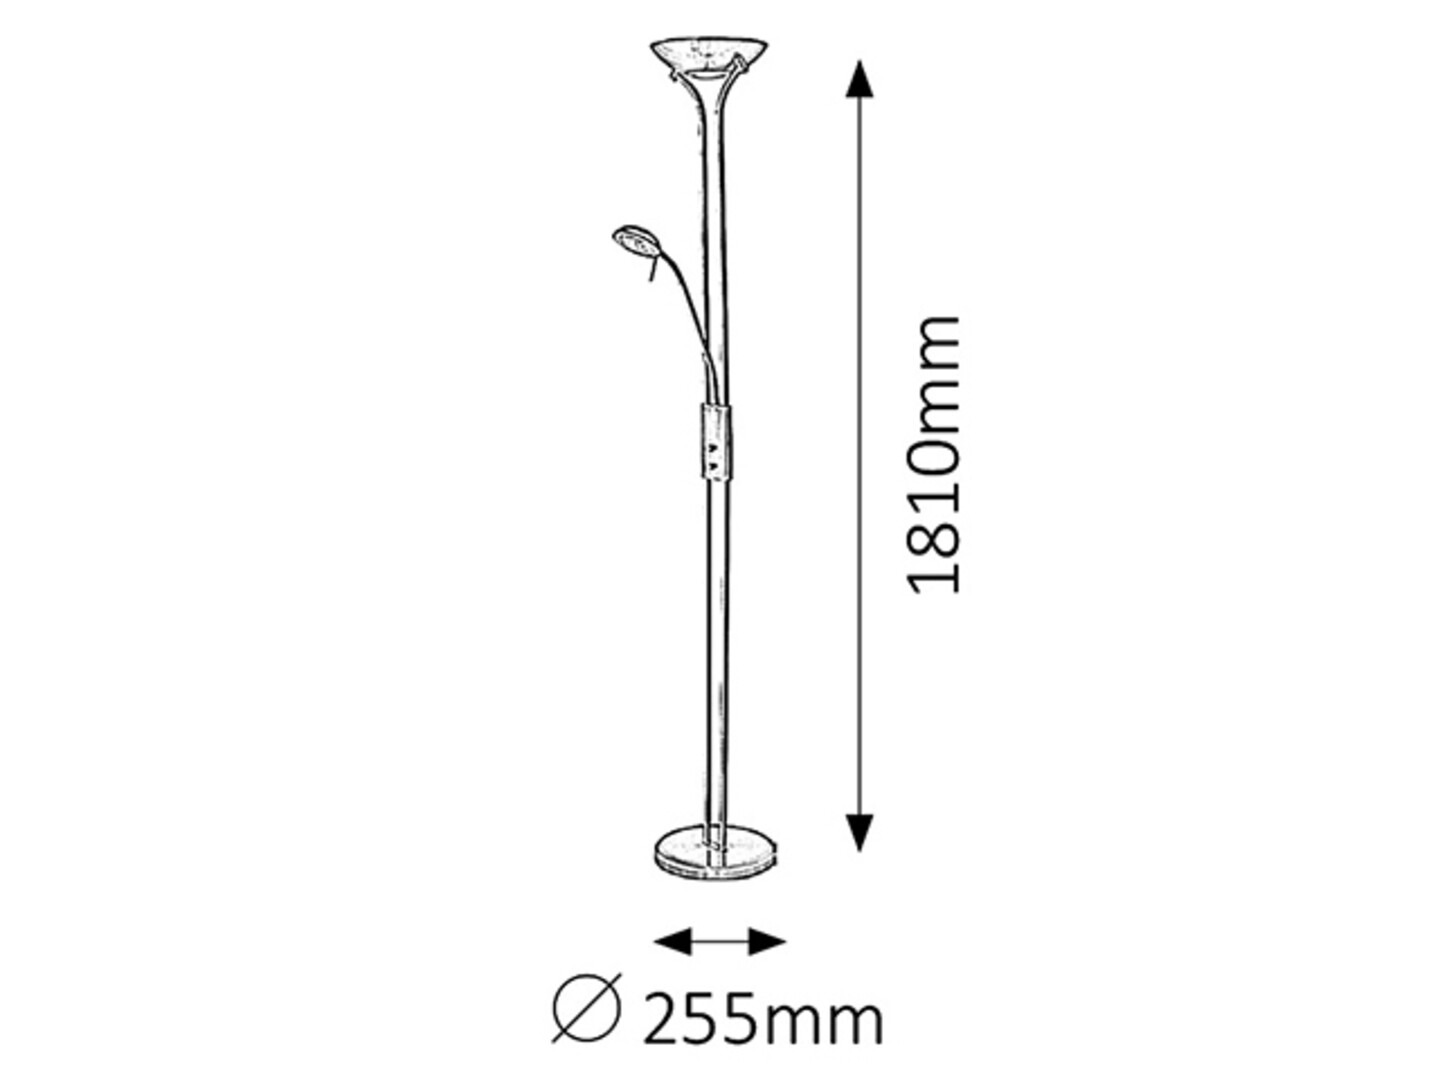 Stehlampe Beta 4075, R7s-G9, 230W, 2700K, 4970lm, Metall, silber, rund, warmweiß, Standard, dimmbar